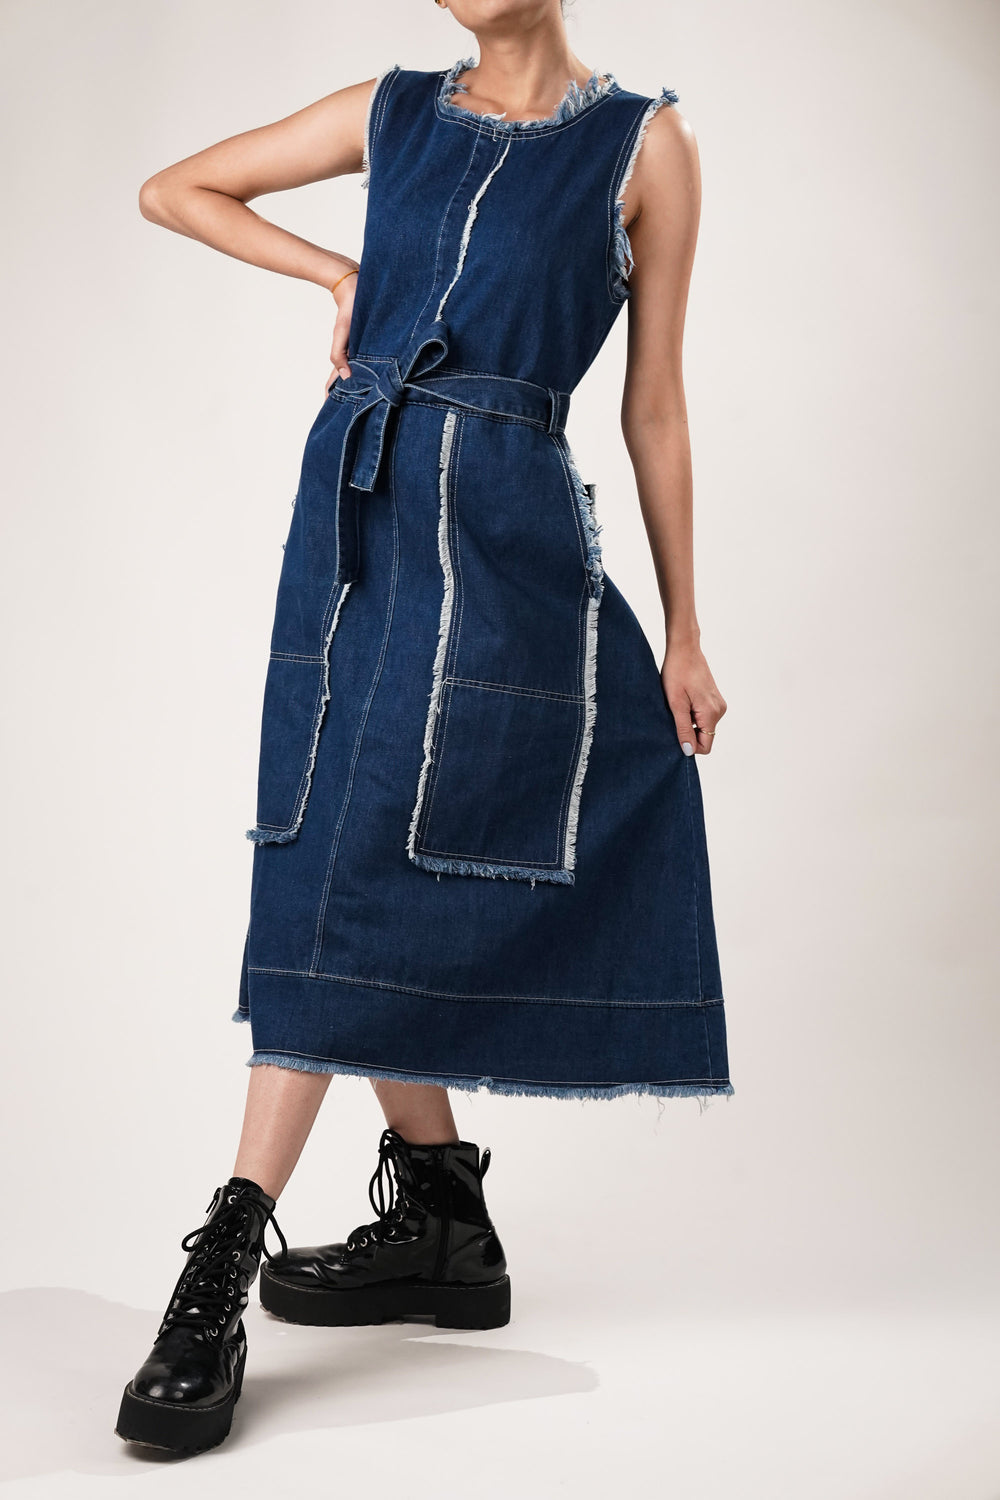 Streetwear-inspired denim dress for women